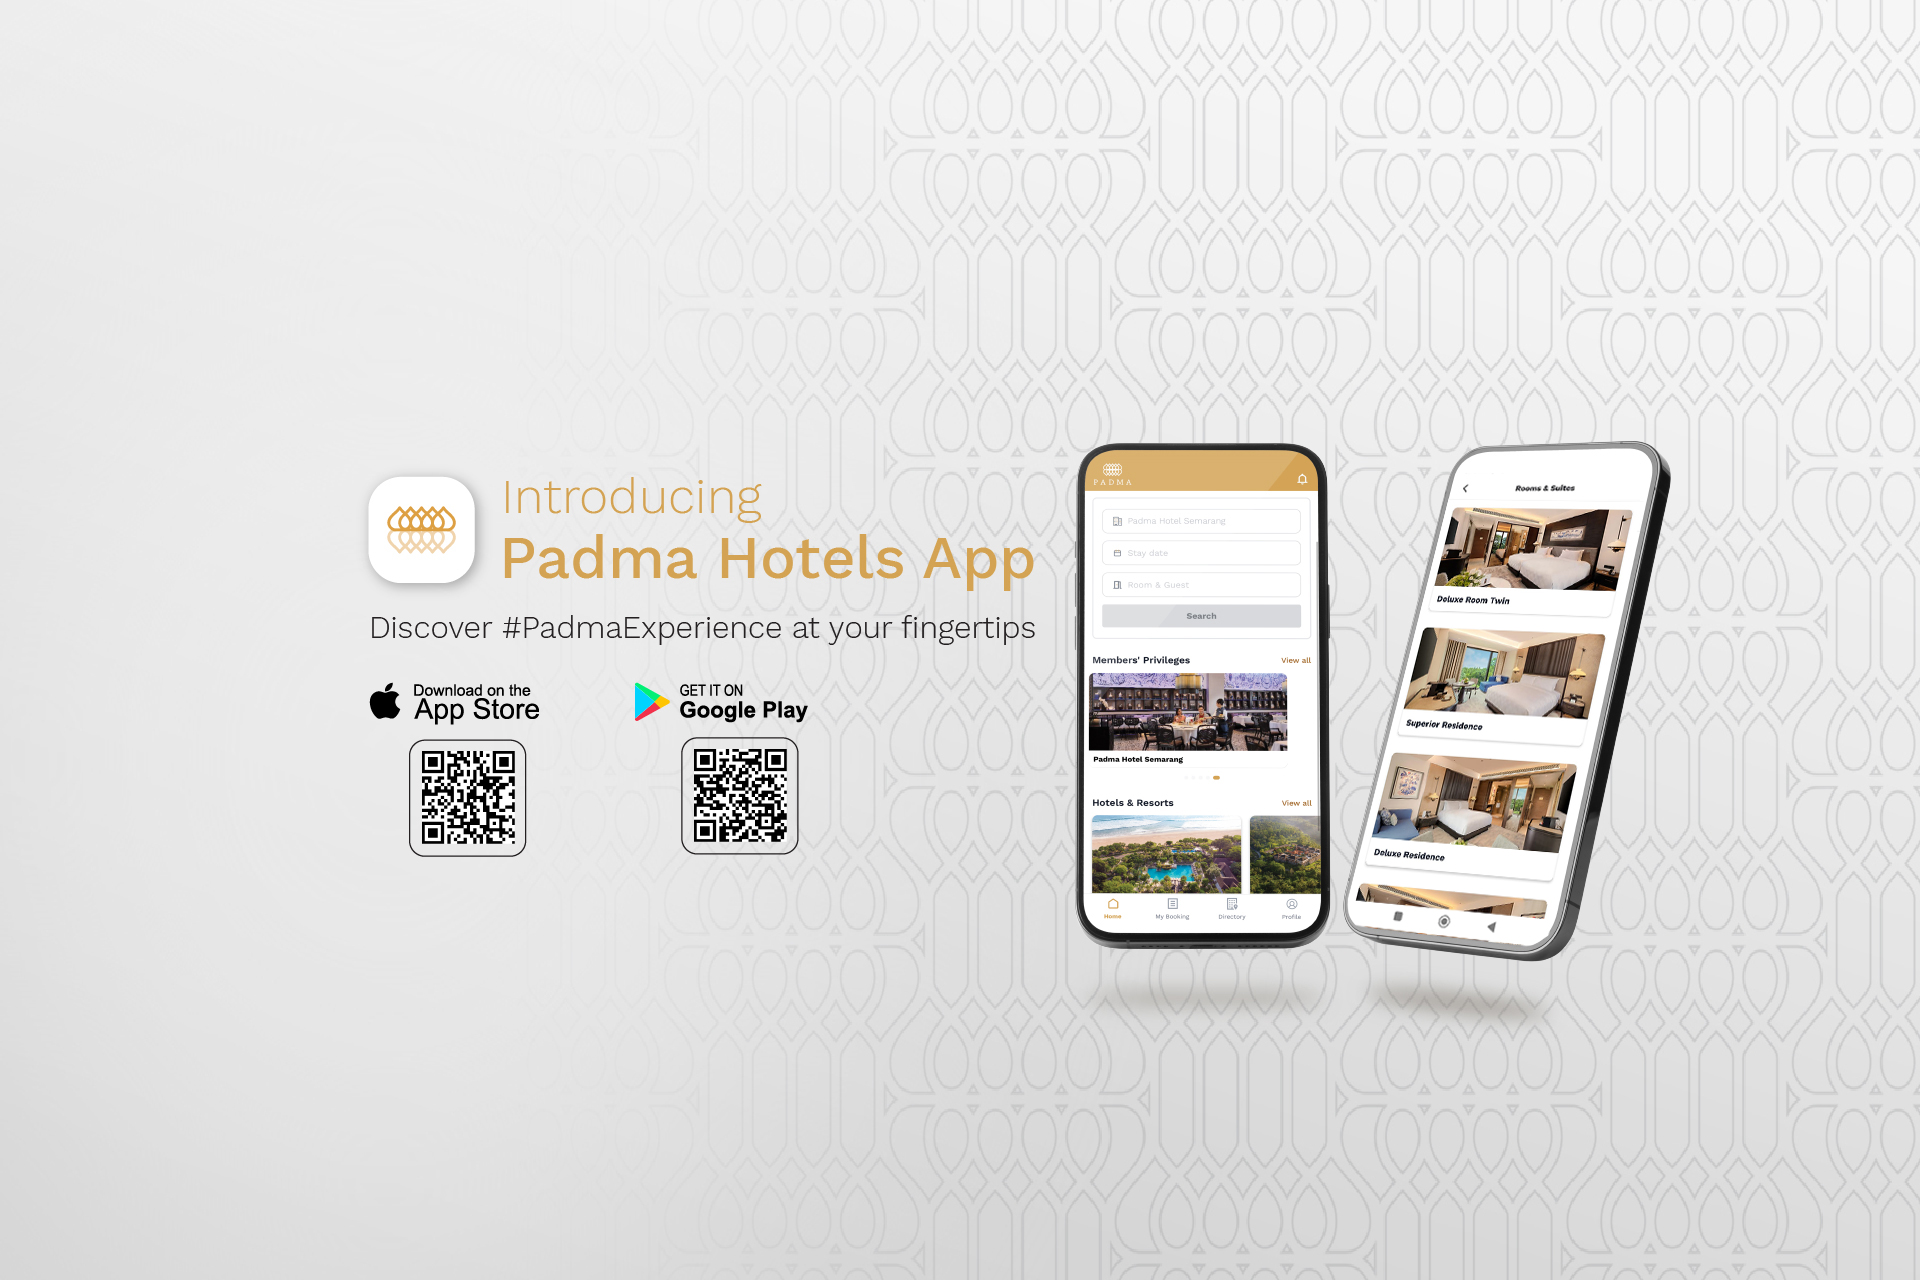 Padma Hotels App